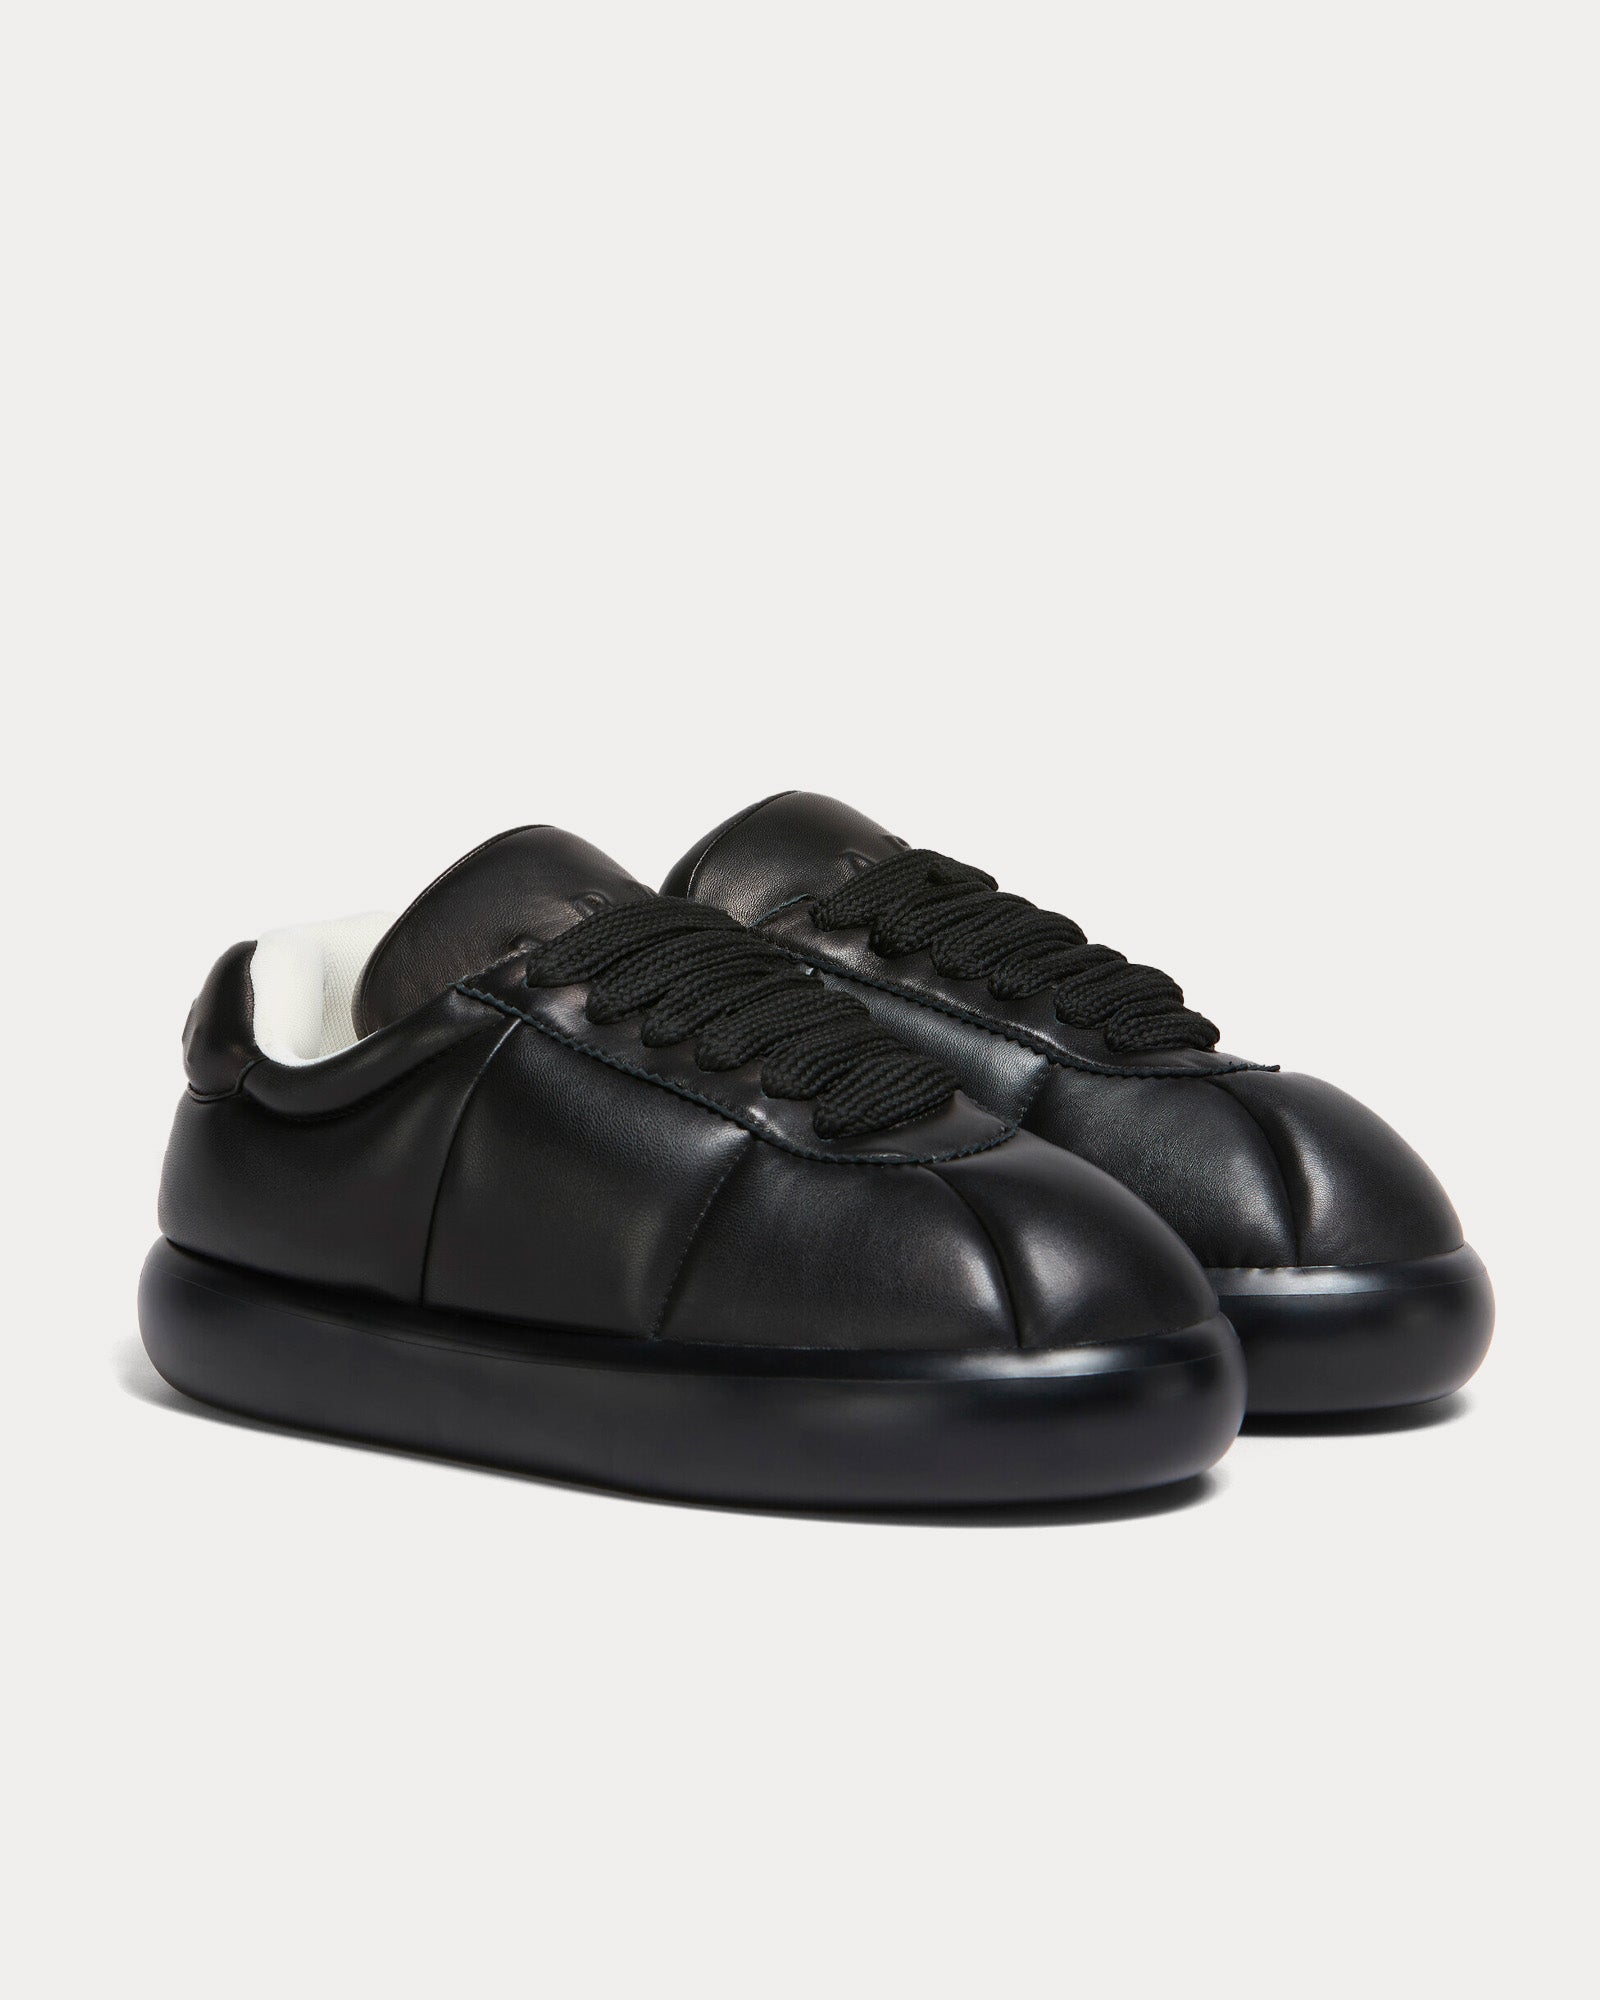 Marni - Bigfoot 2.0 Leather Black Low Top Sneakers